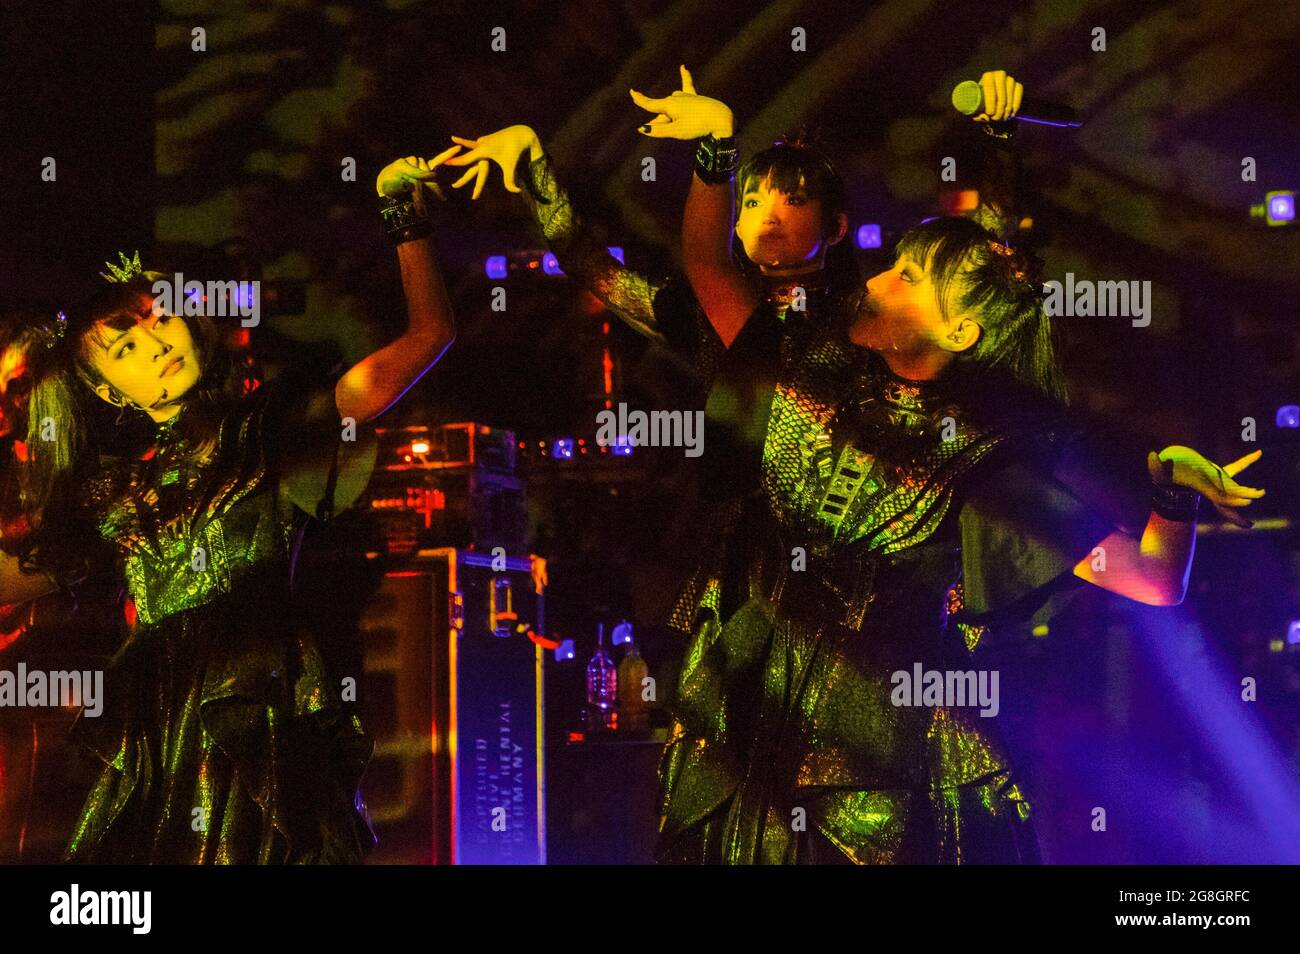 La band giapponese di kawaii metal BabyMetal vive in concerto alla Brixton Academy di Londra Foto Stock